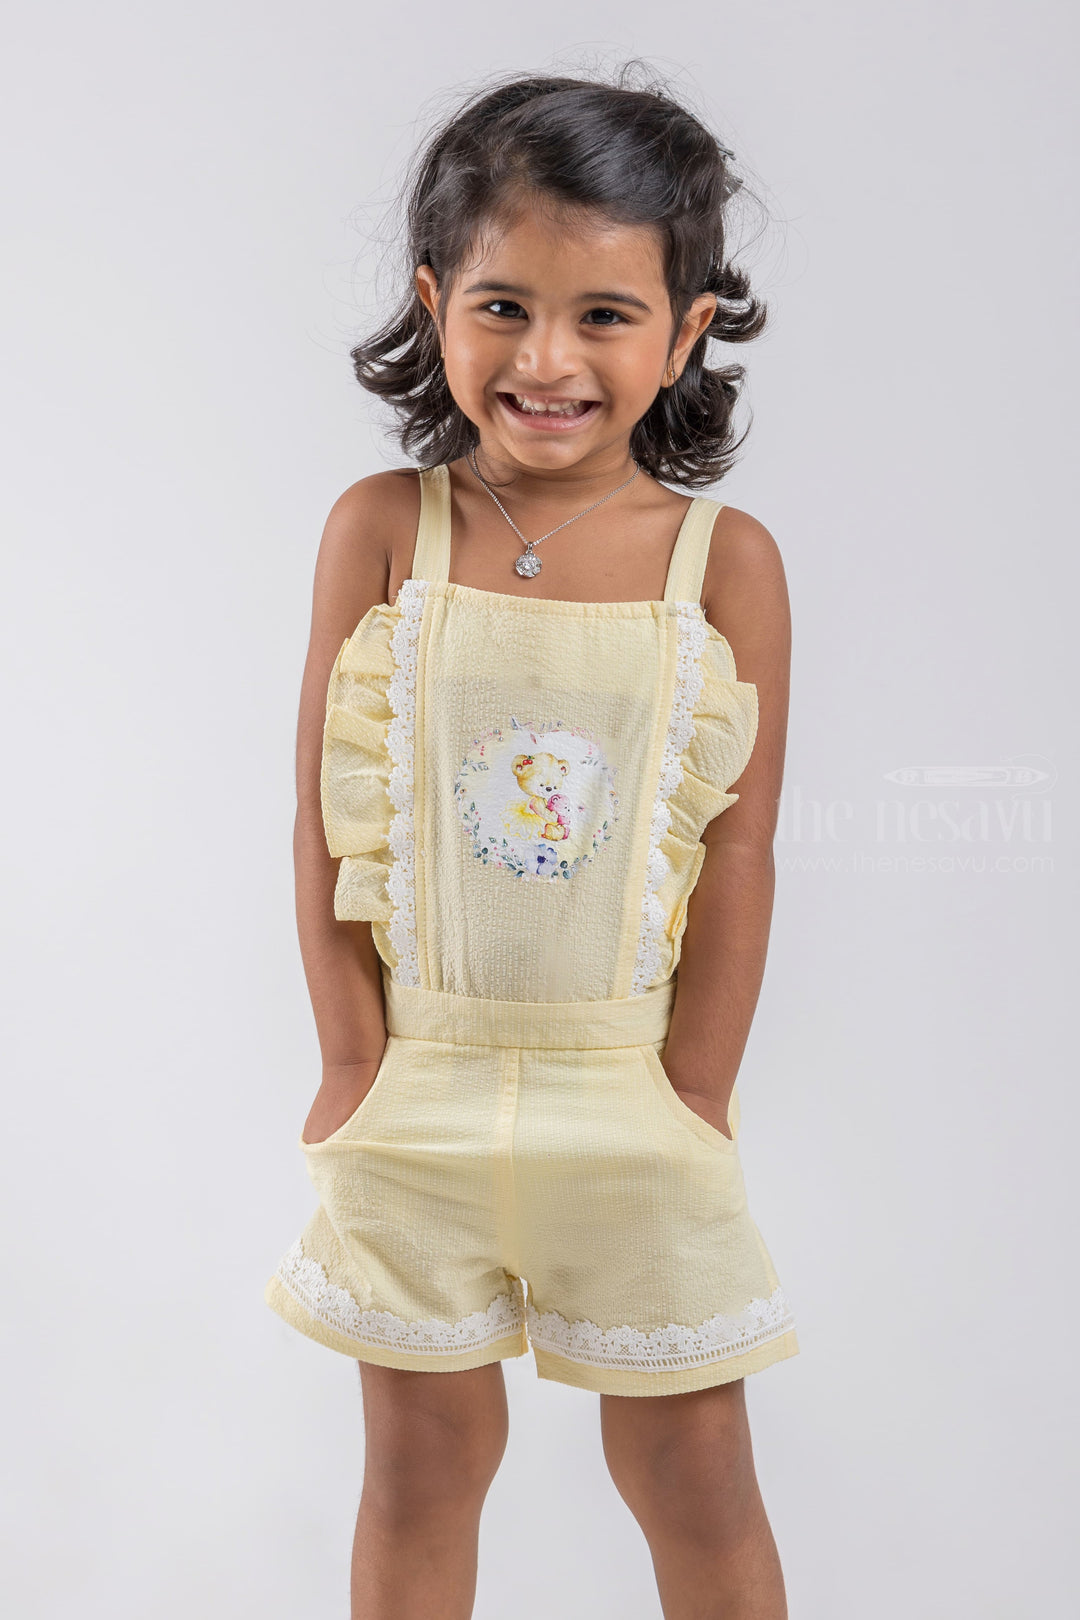 The Nesavu Baby Dungarees Cute Teddy Bear Printed Sleeveless Yellow Top and Blue Trouser Set for Baby Girls psr silks Nesavu